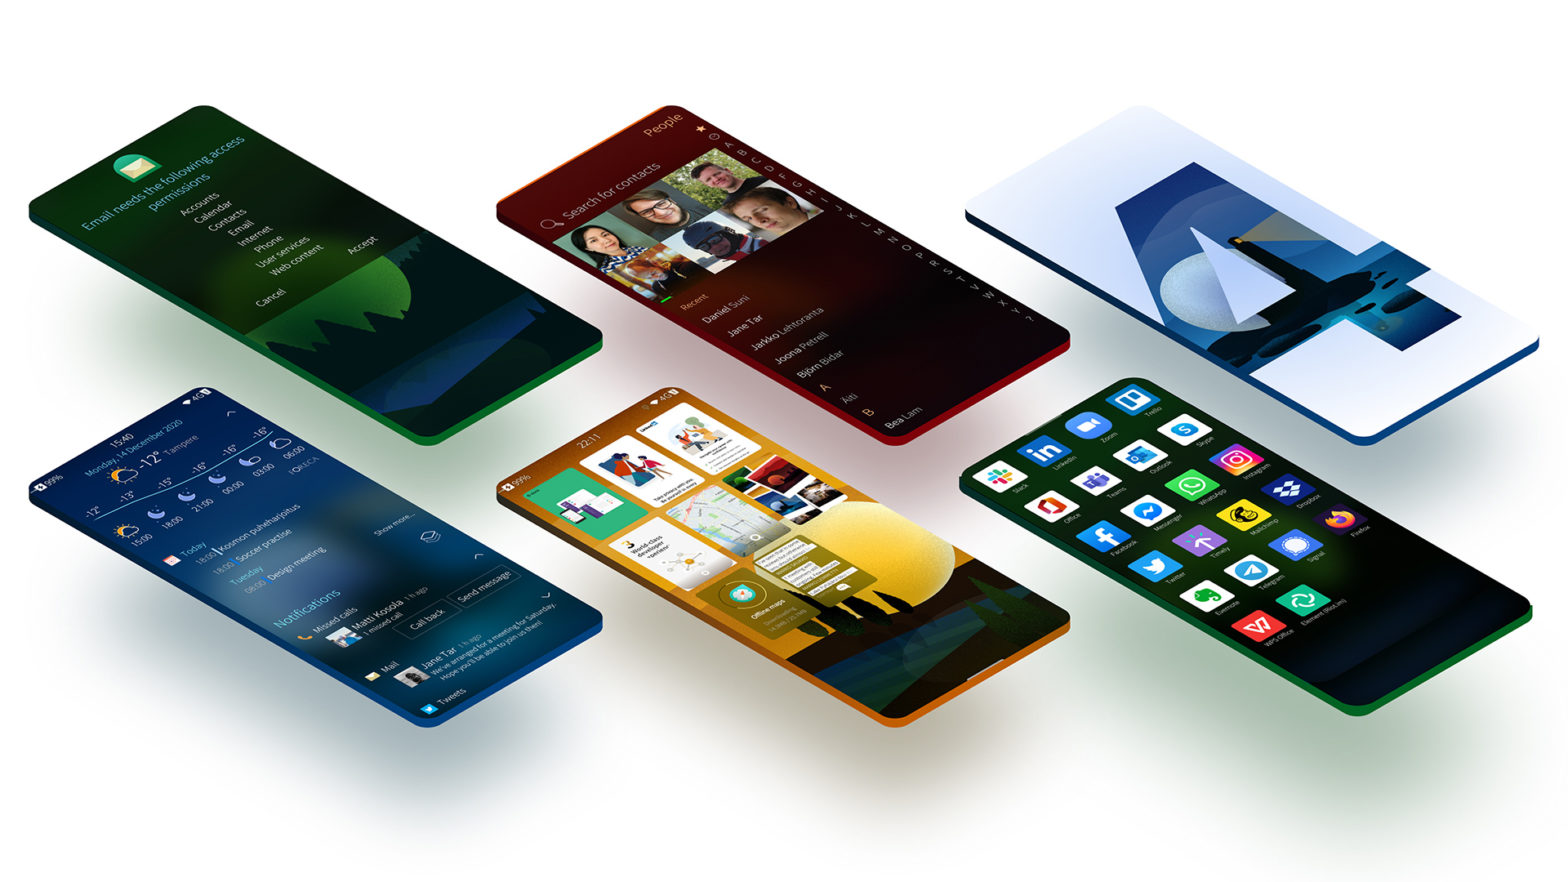 The company behind Android alternative Sailfish OS is finally profitable